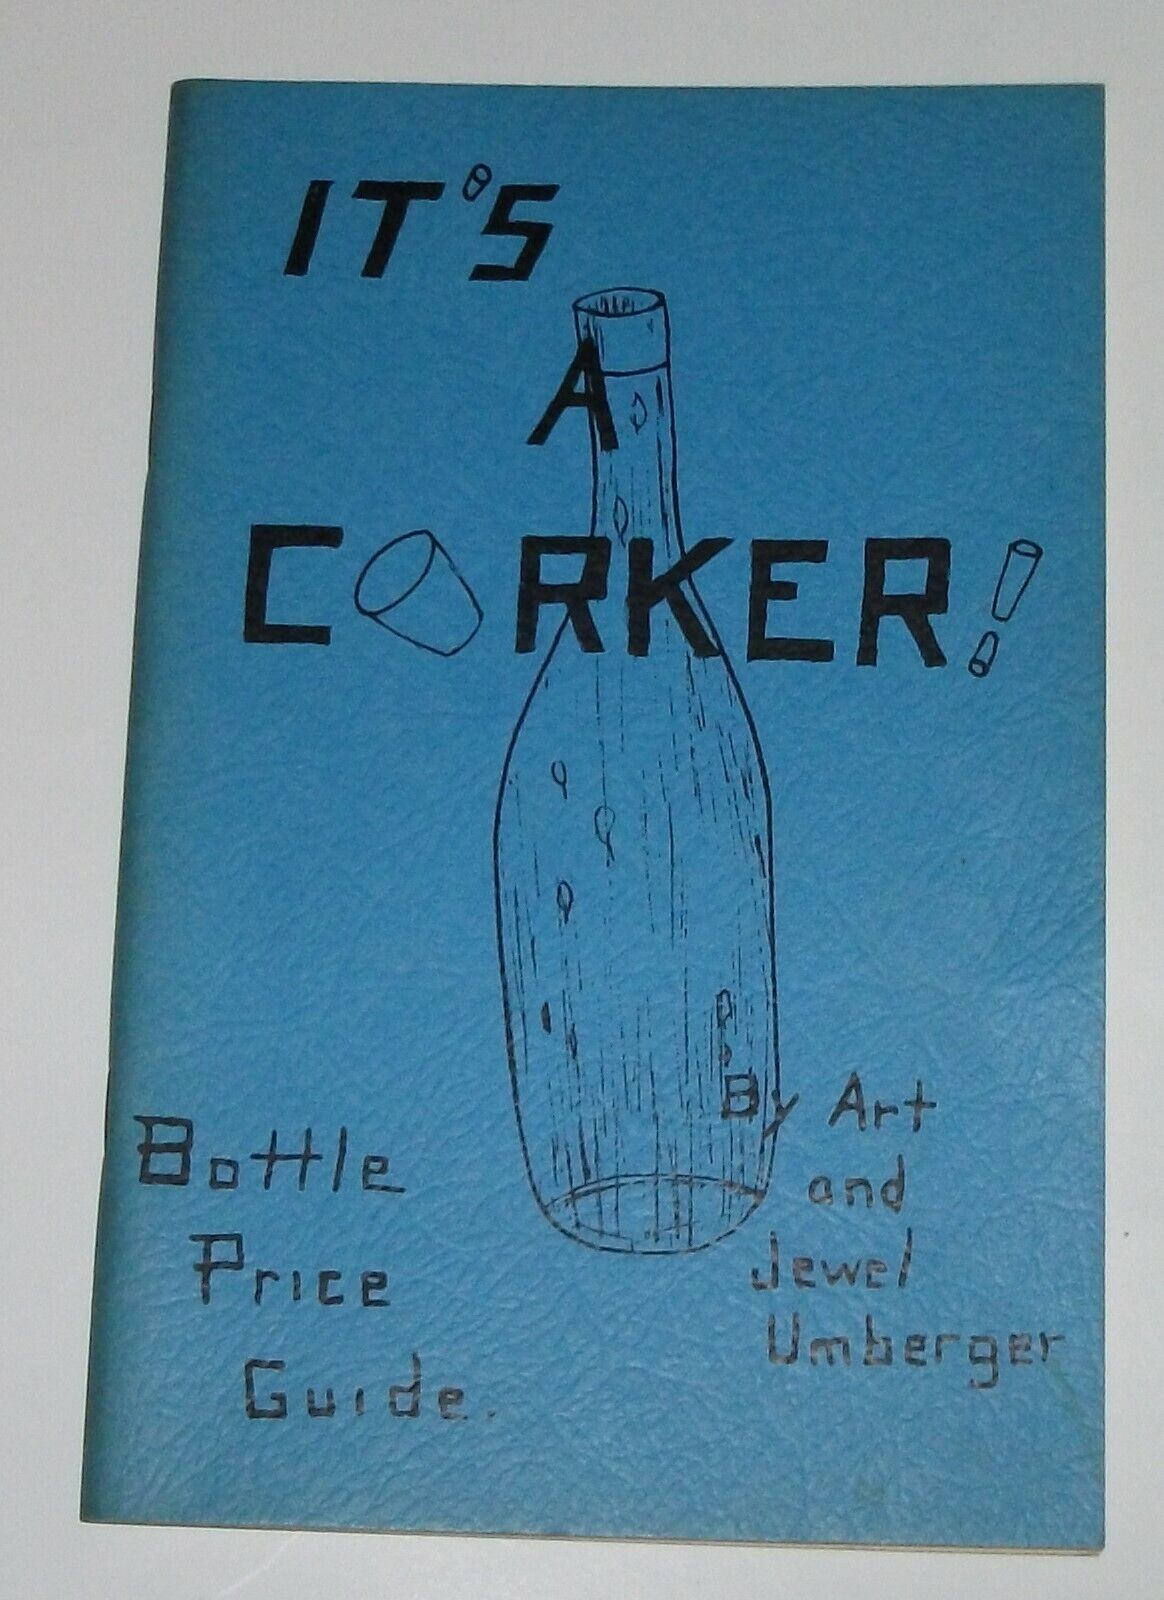 Vintage It's A Corker! Bottle Price Guide Art & Jewel Umberger 1966